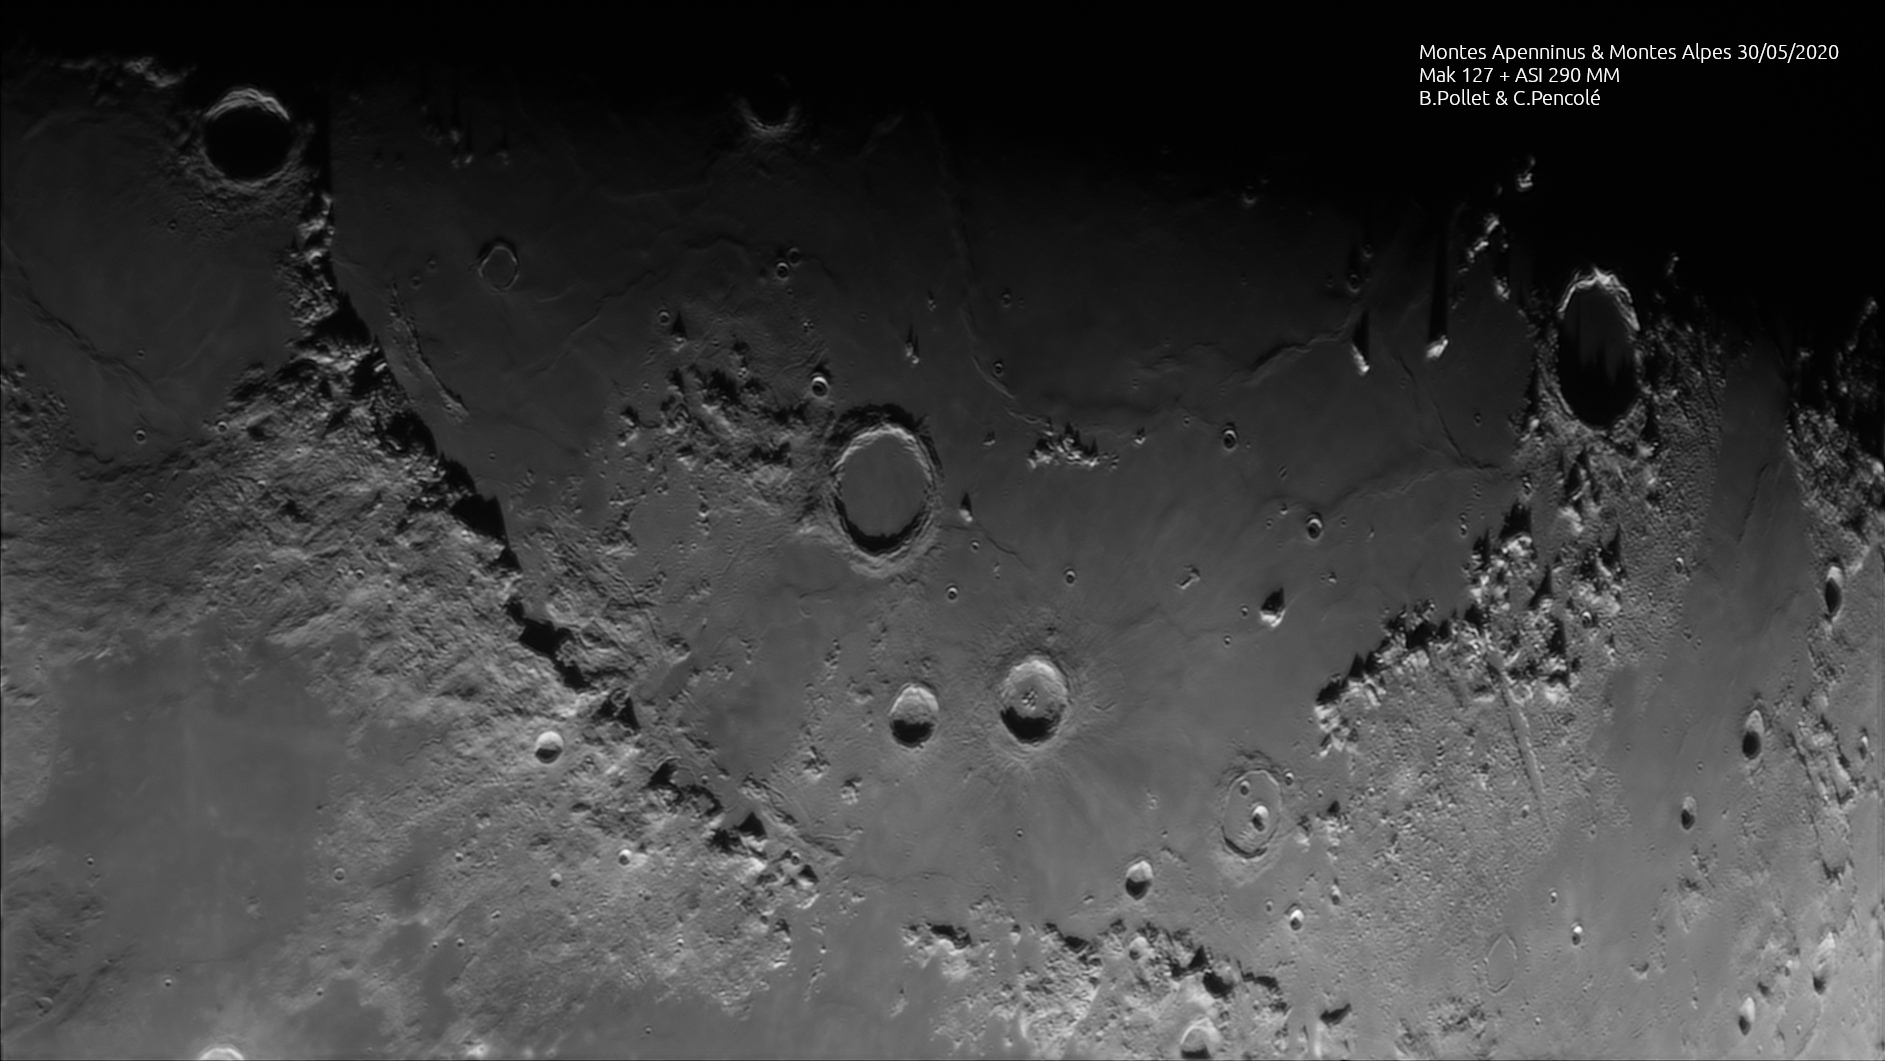 2020-05-30_lune-Montes-alpes-Montes-Apenninus-texte.jpg